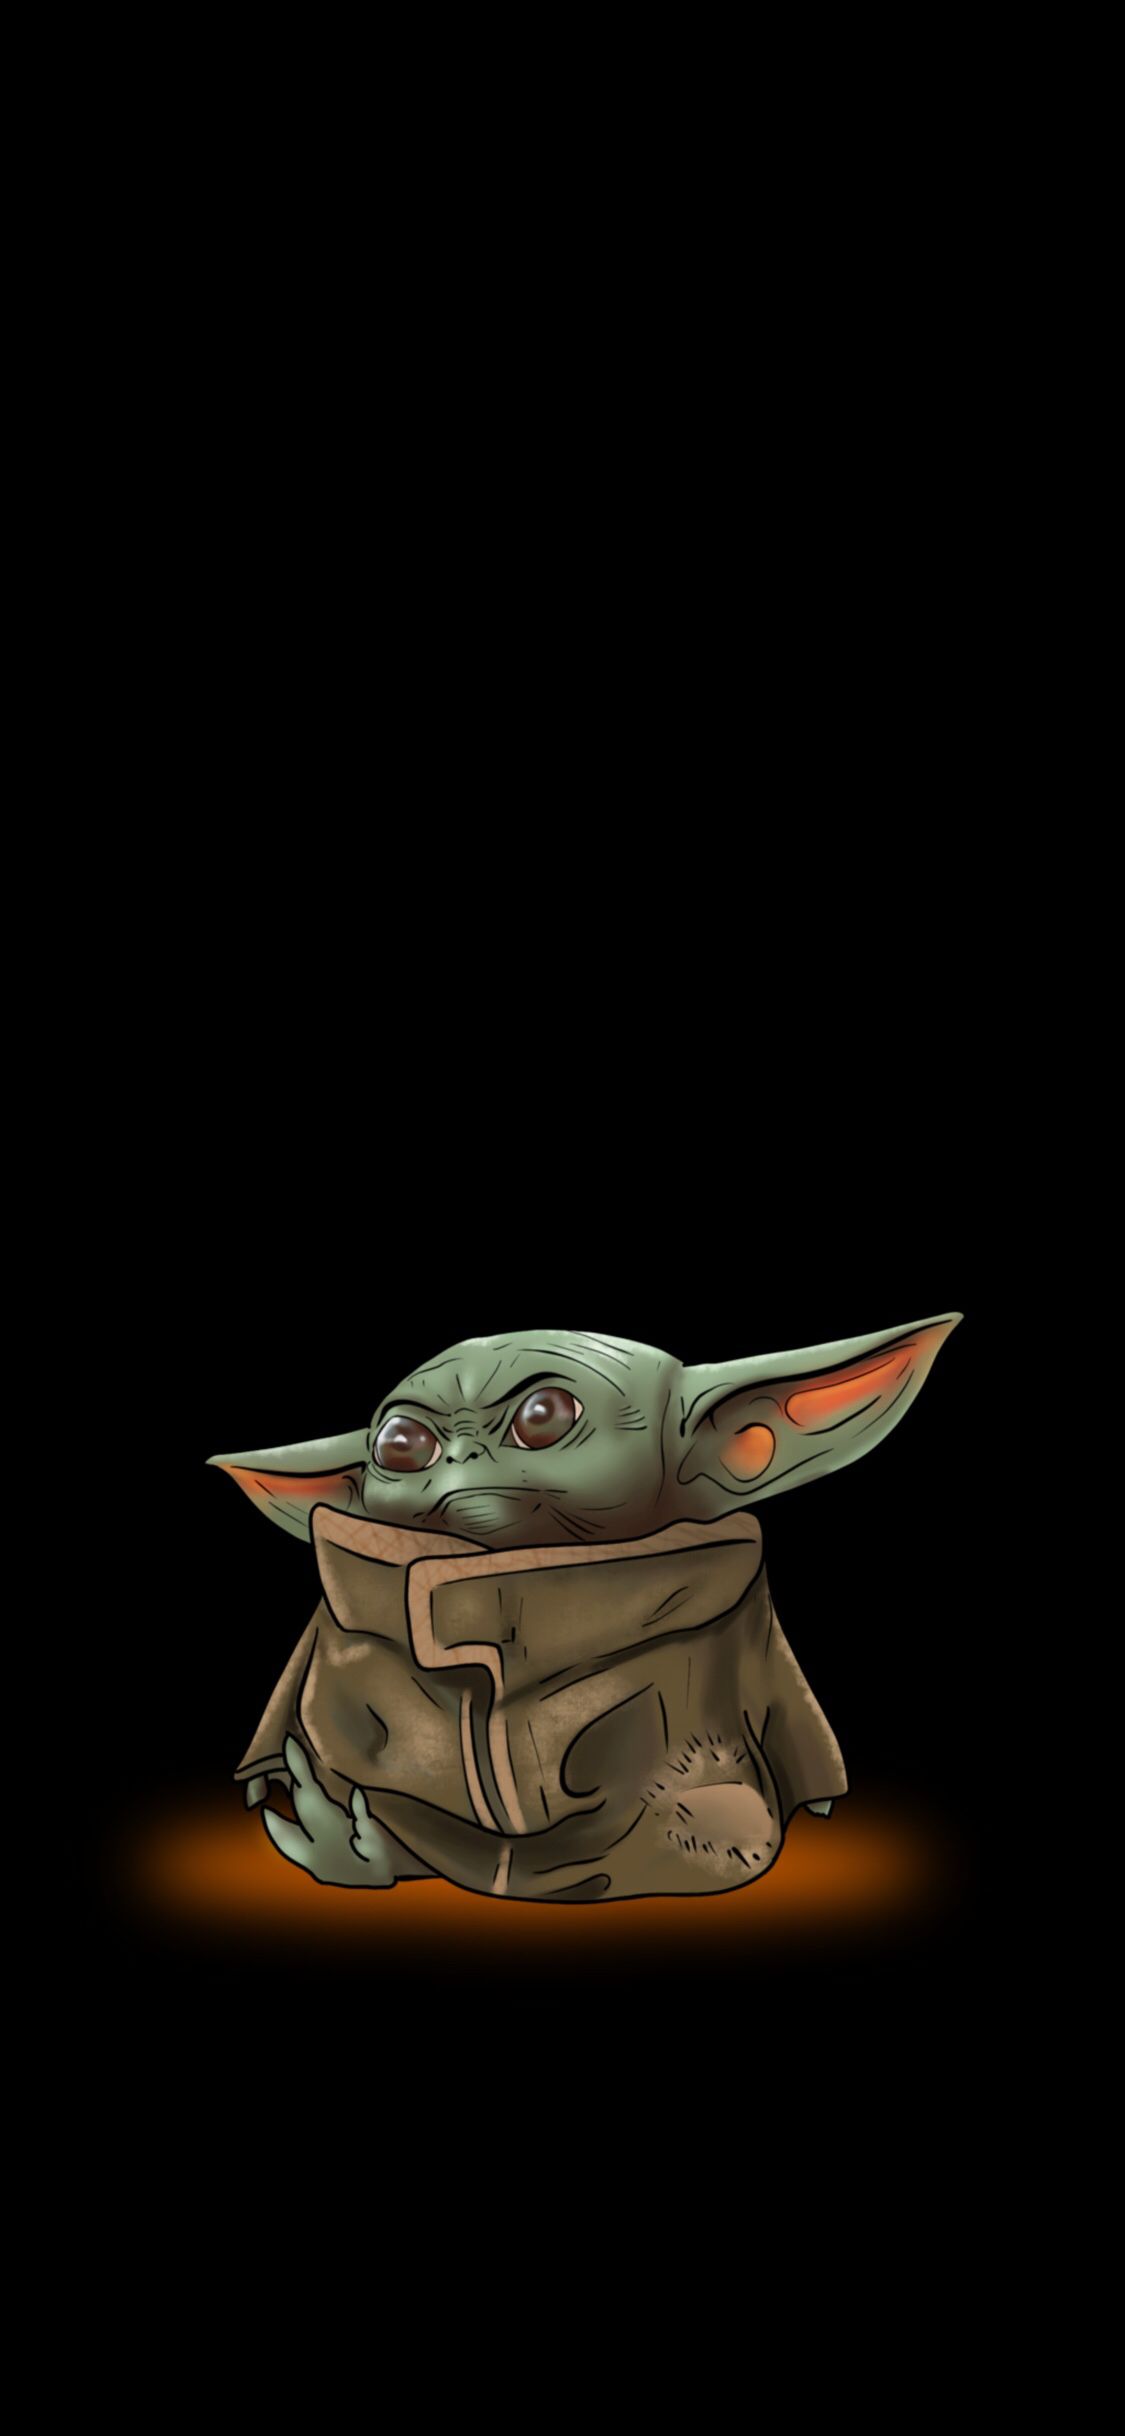 Made Baby Yoda in Procreate [2436x1125]